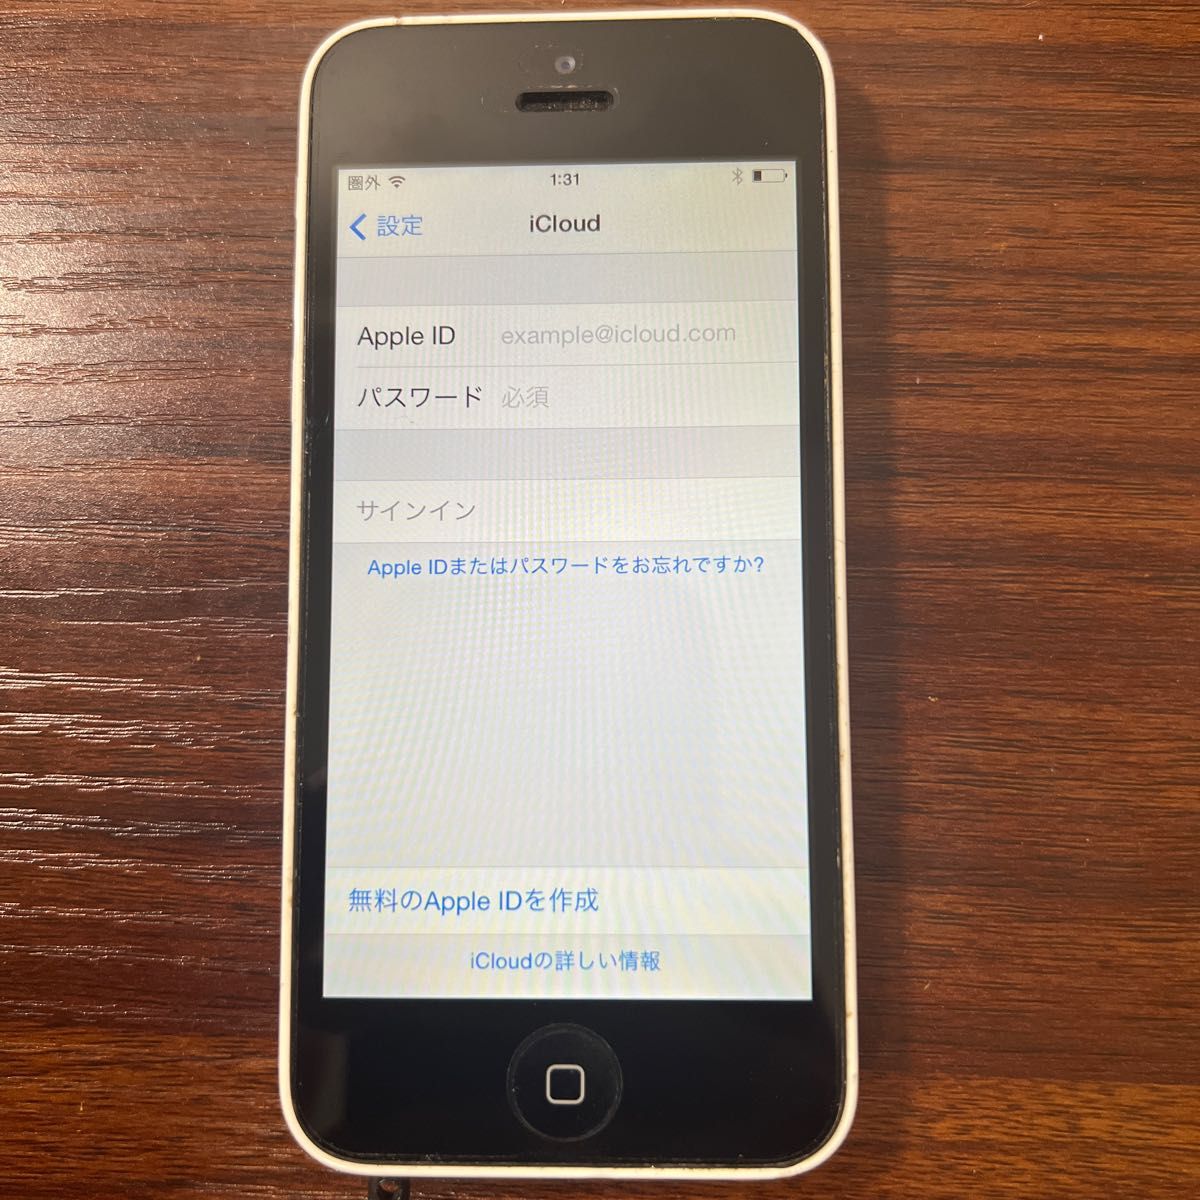 K45 iPhone 5c White 16 GB A1456 スマホ本体｜PayPayフリマ